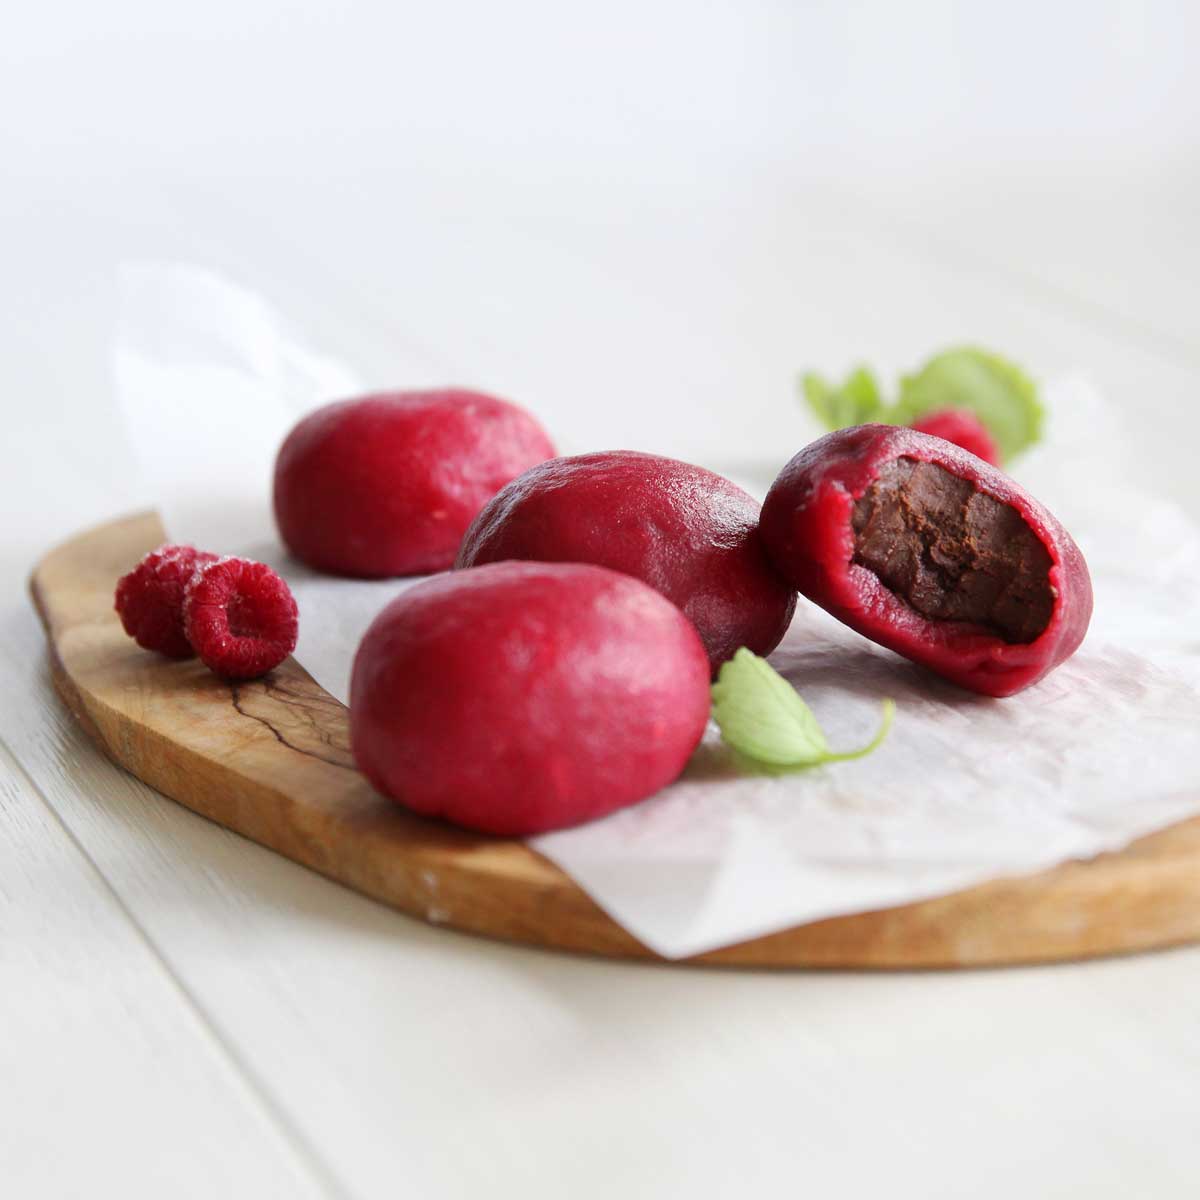 Vegan Raspberry Chocolate Mochi with Chocolate Hazelnut Filling - Cashew Butter Kinako Mochi